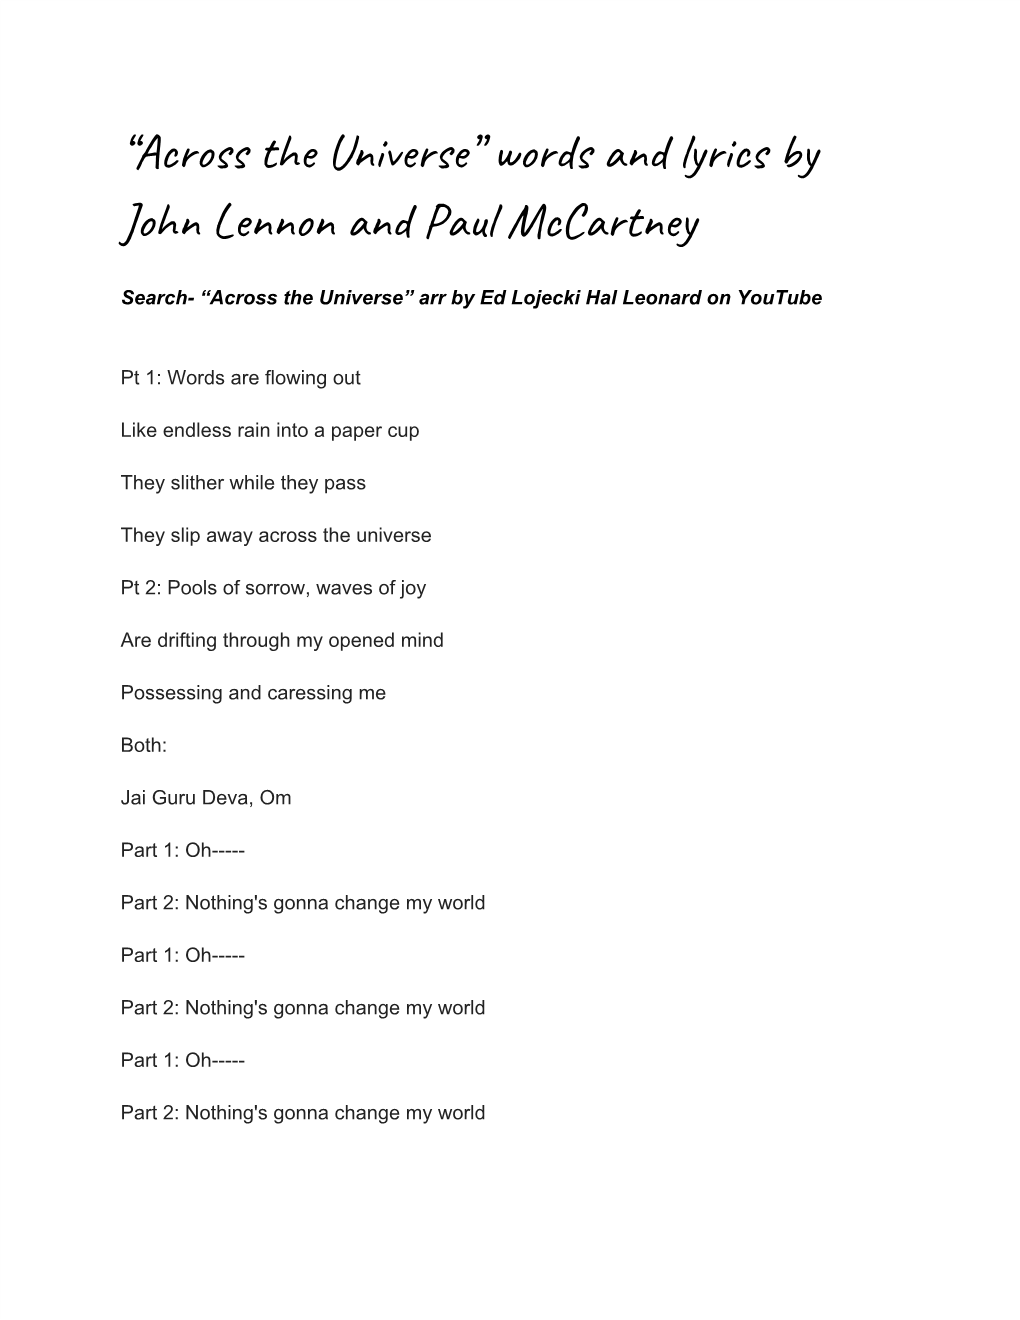 “Across the Universe” Words and Lyrics by John Lennon and Paul Mccartney